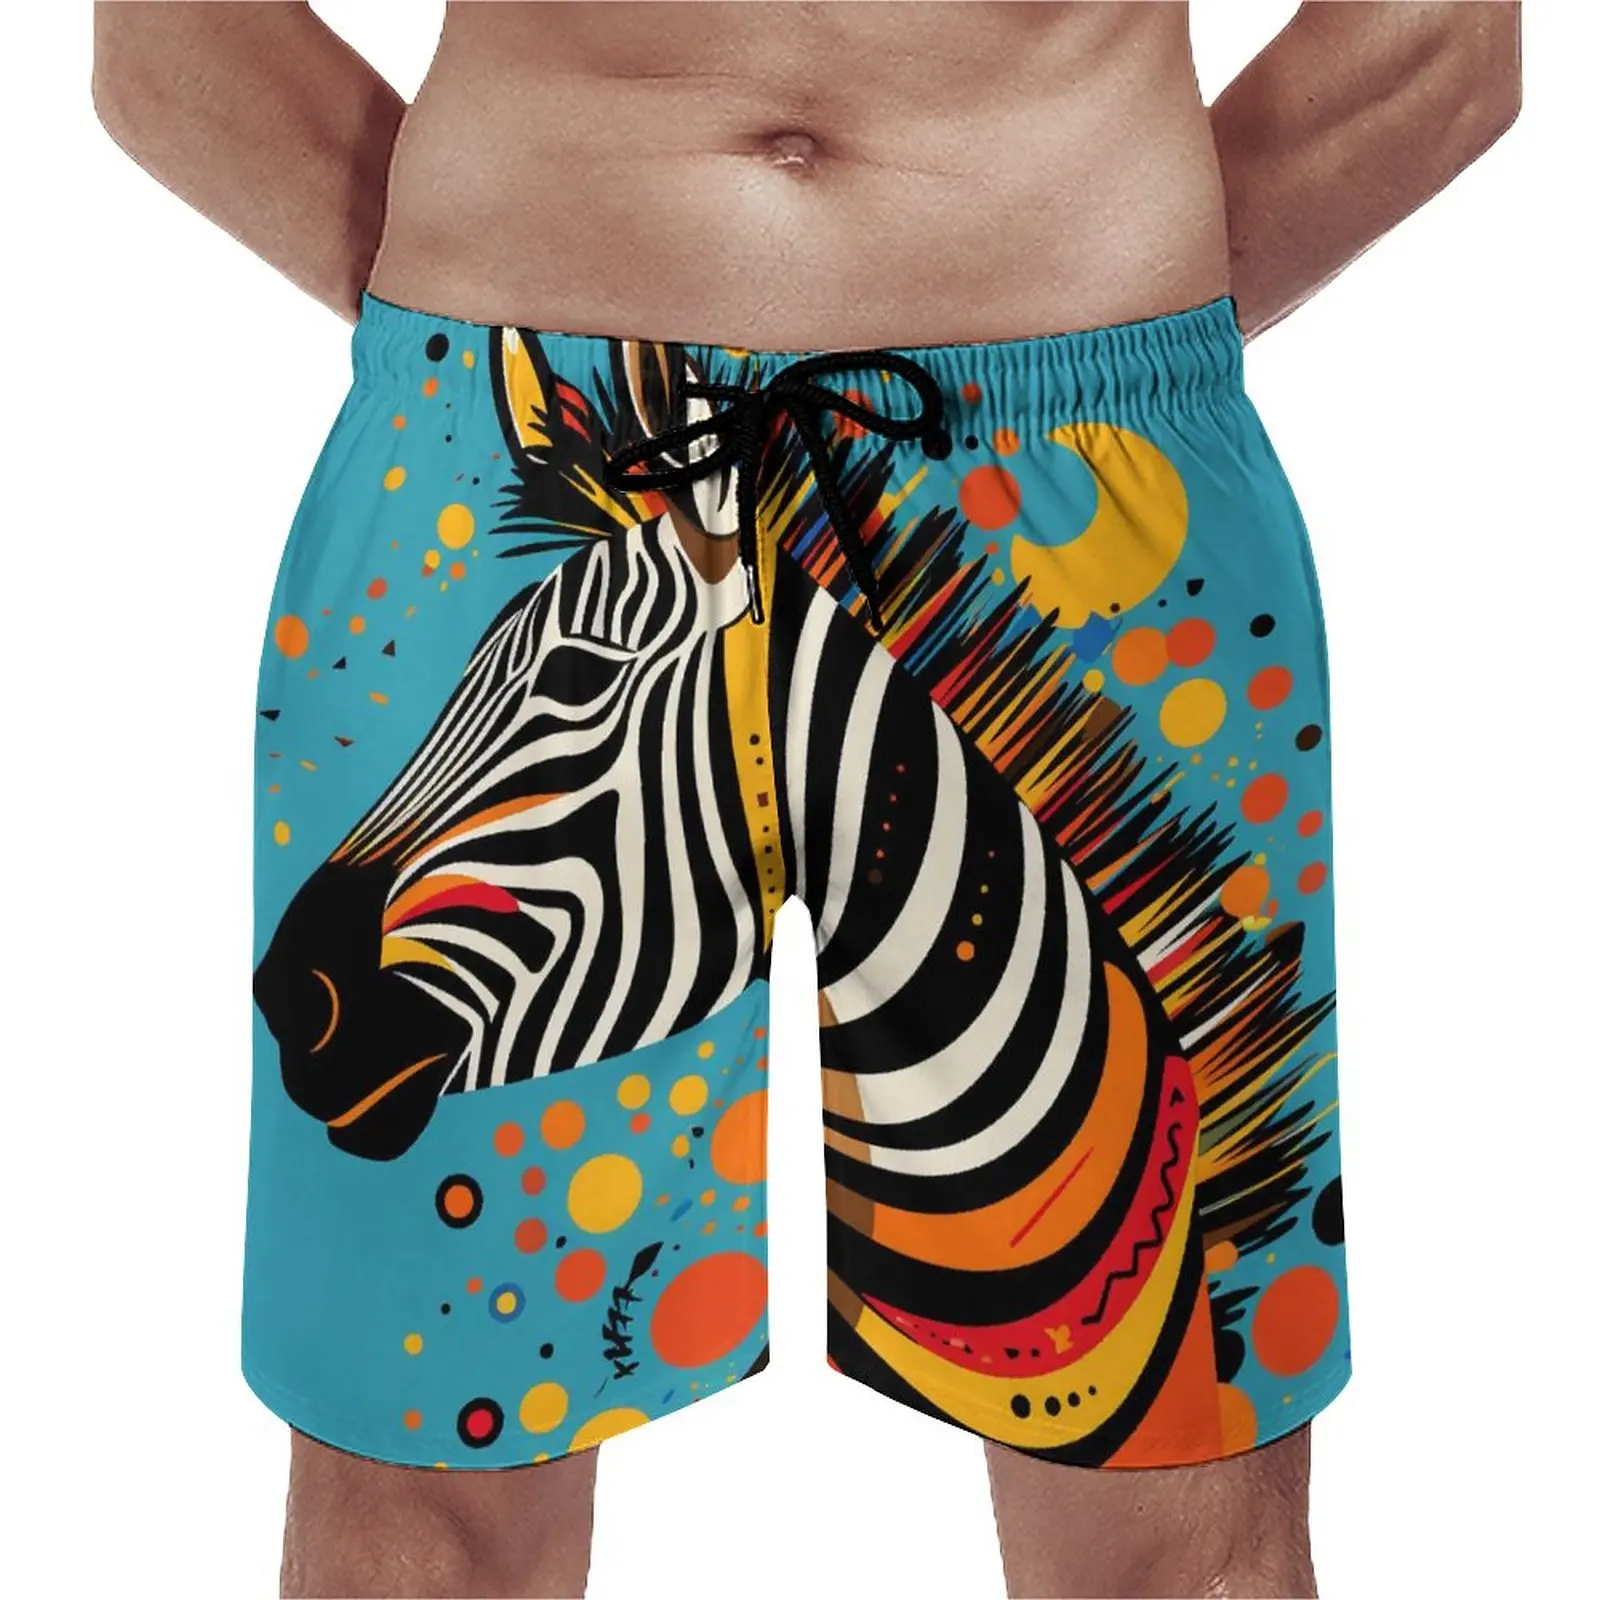 

Zebra Board Shorts Graffiti Hawaii Beach Short Pants Men Design Running Quick Dry Swim Trunks Gift Idea